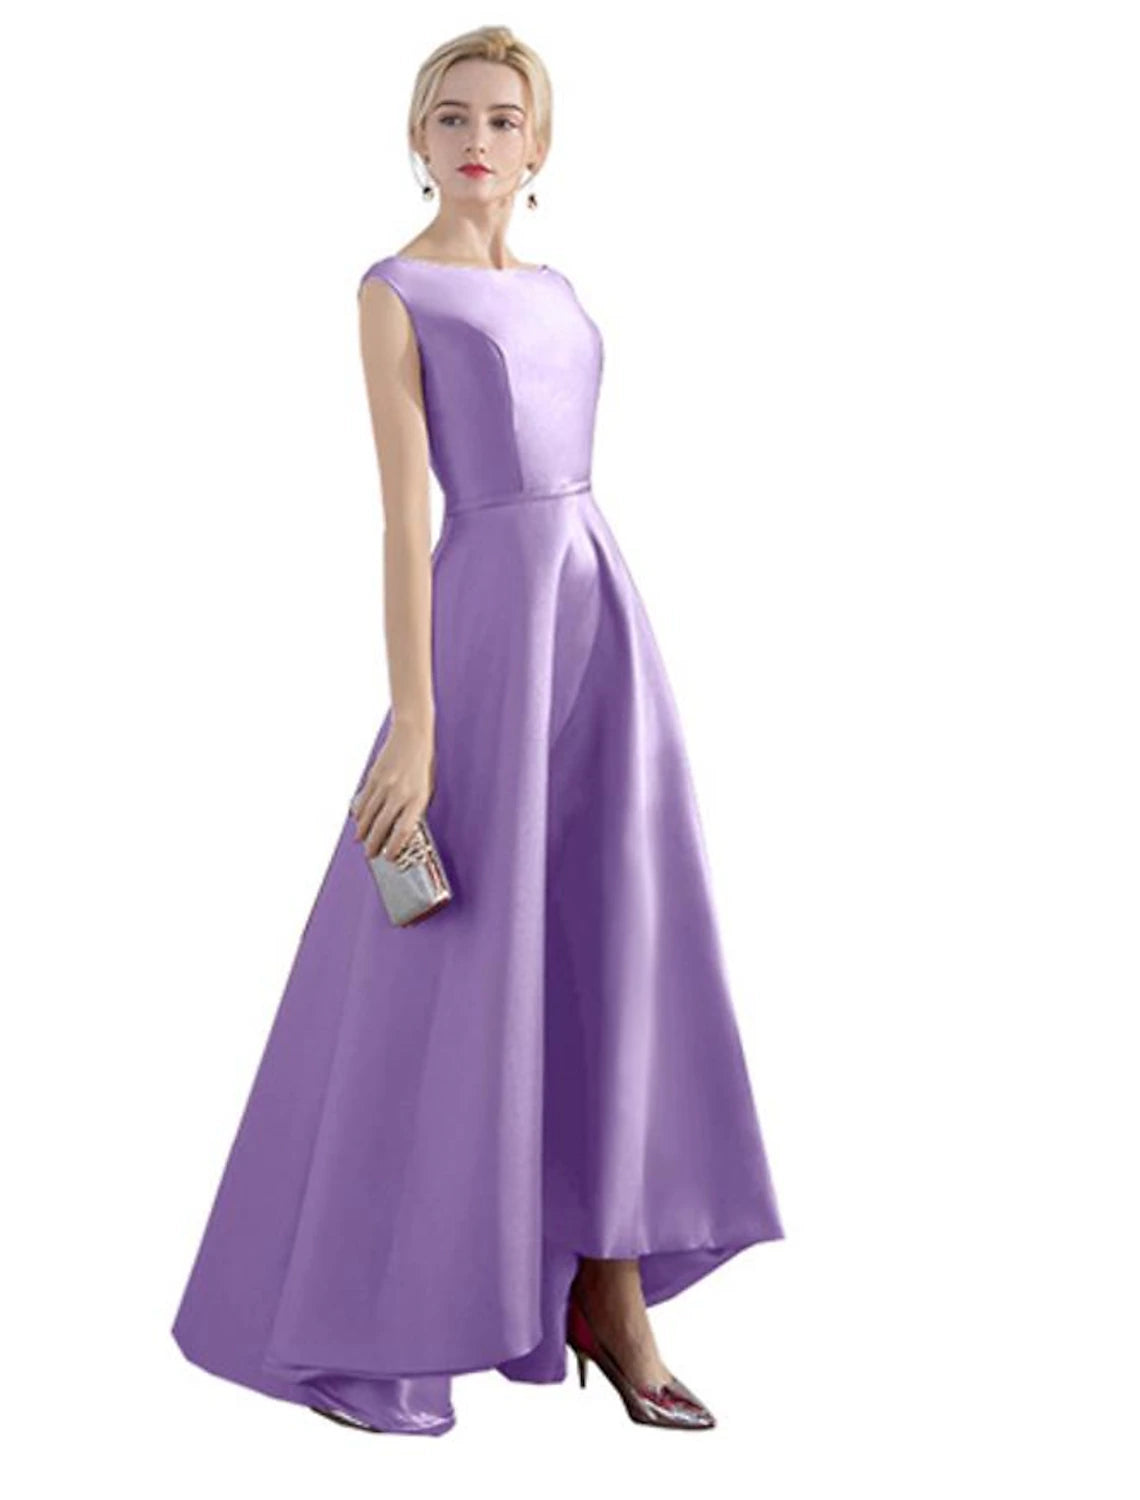 A-Line Evening Gown Elegant Minimalist Dress Party Wear Wedding Guest Asymmetrical Sleeveless Jewel Neck Satin with Sleek